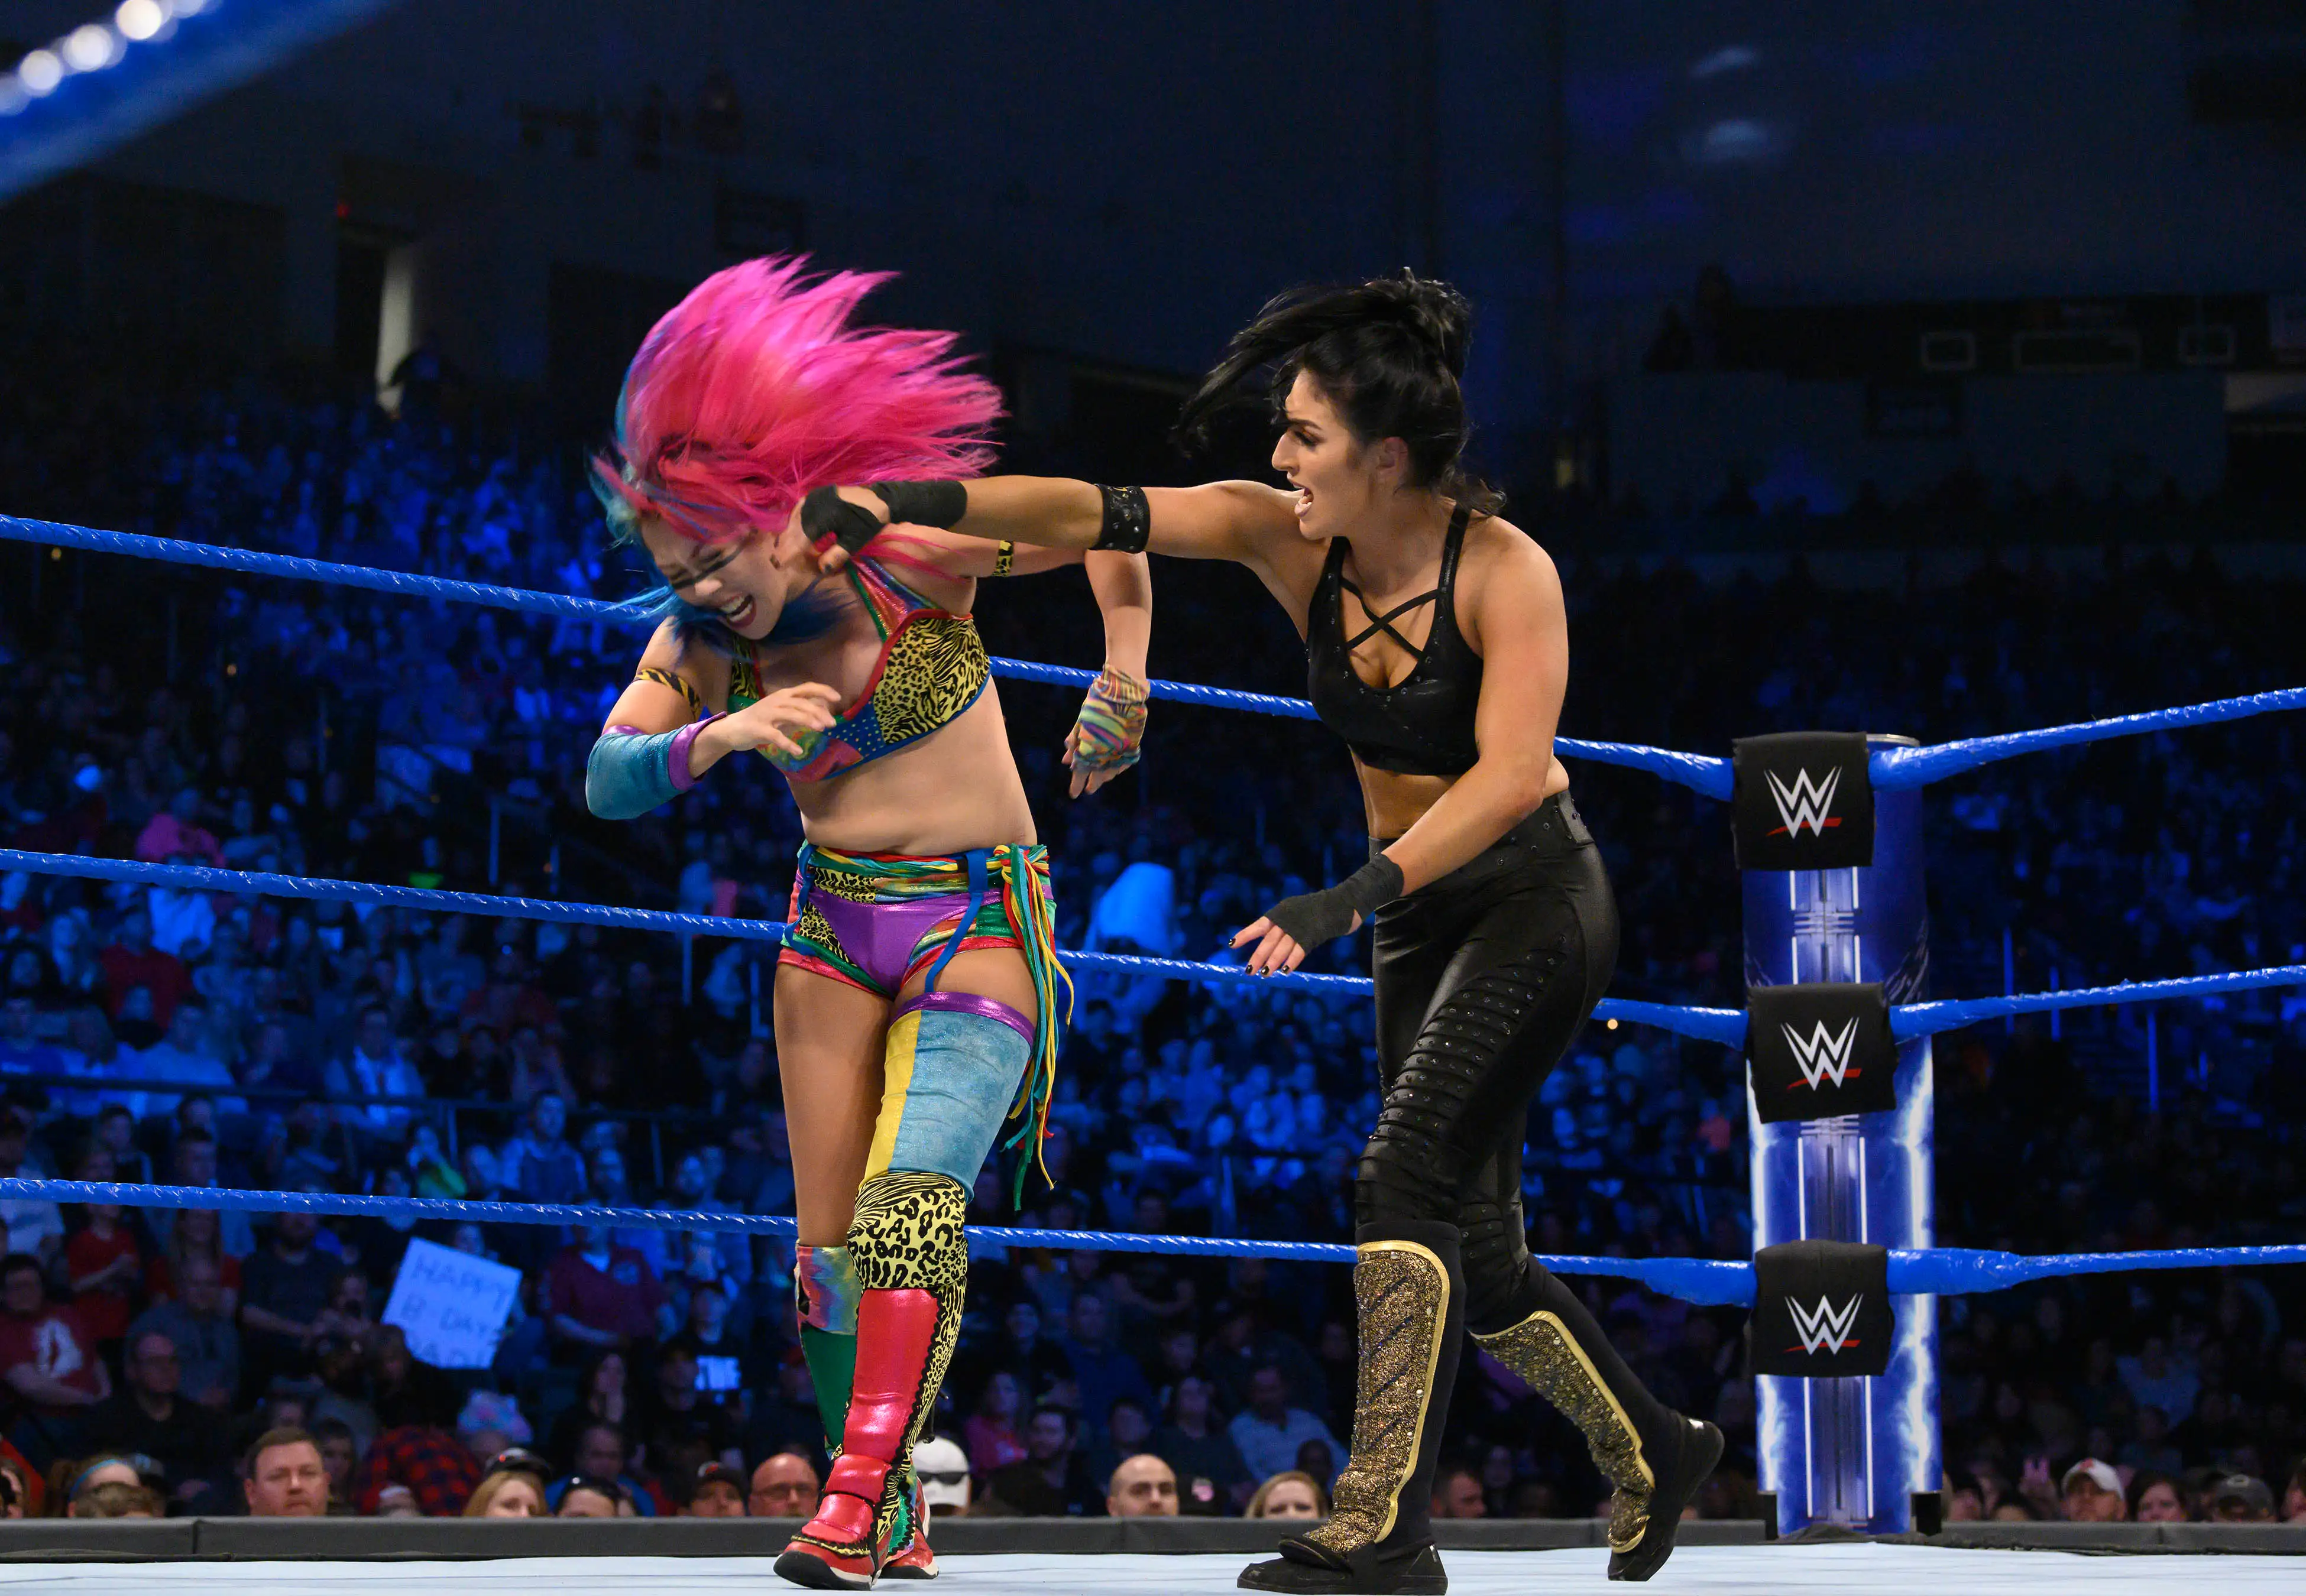 Daria Berenato (right) AKA  Sonya Deville  battles  Asuka  at a WWE SmackDown event in March 2019